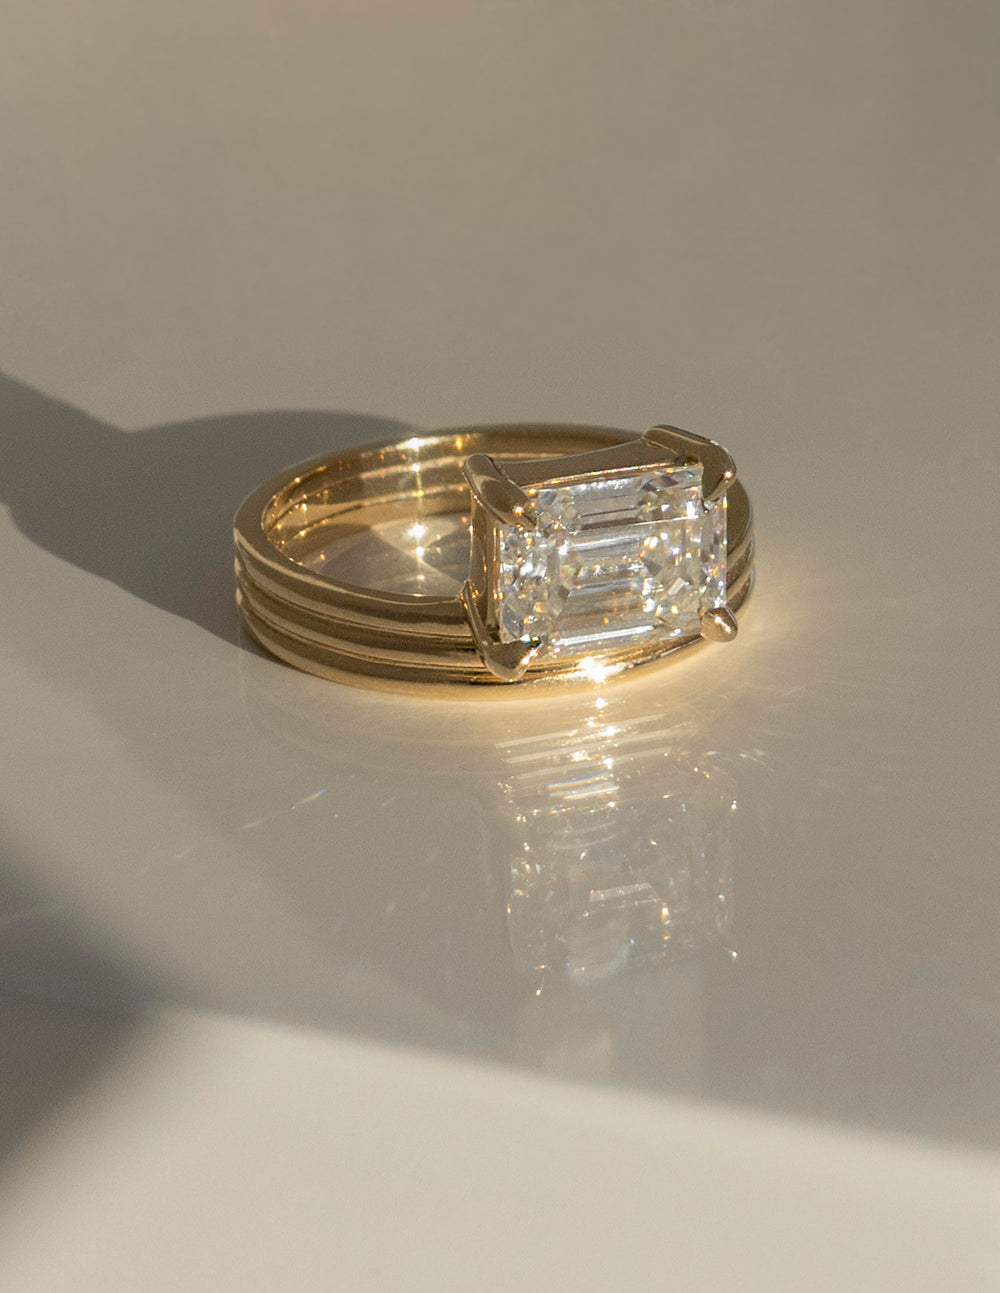 Cadette Niwa Emerald nature inspired engagement ring. Unique simple bold engagement ring. Unique japanese inspired engagement ring.